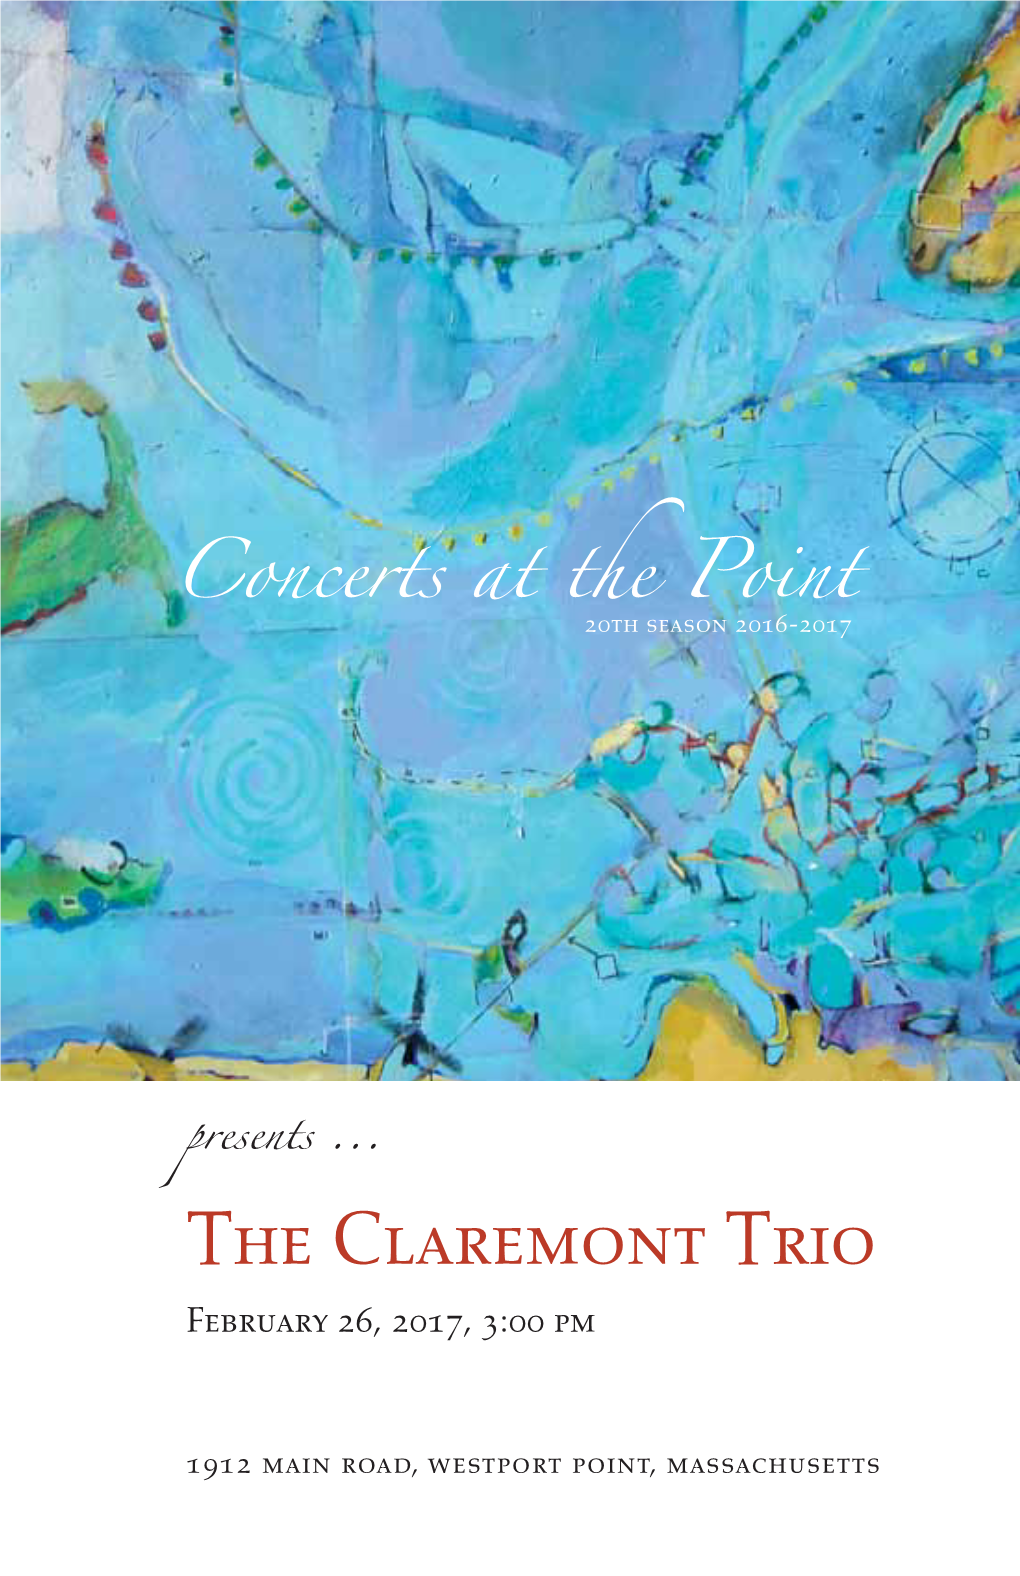 The Claremont Trio February 26, 2017, 3:00 Pm